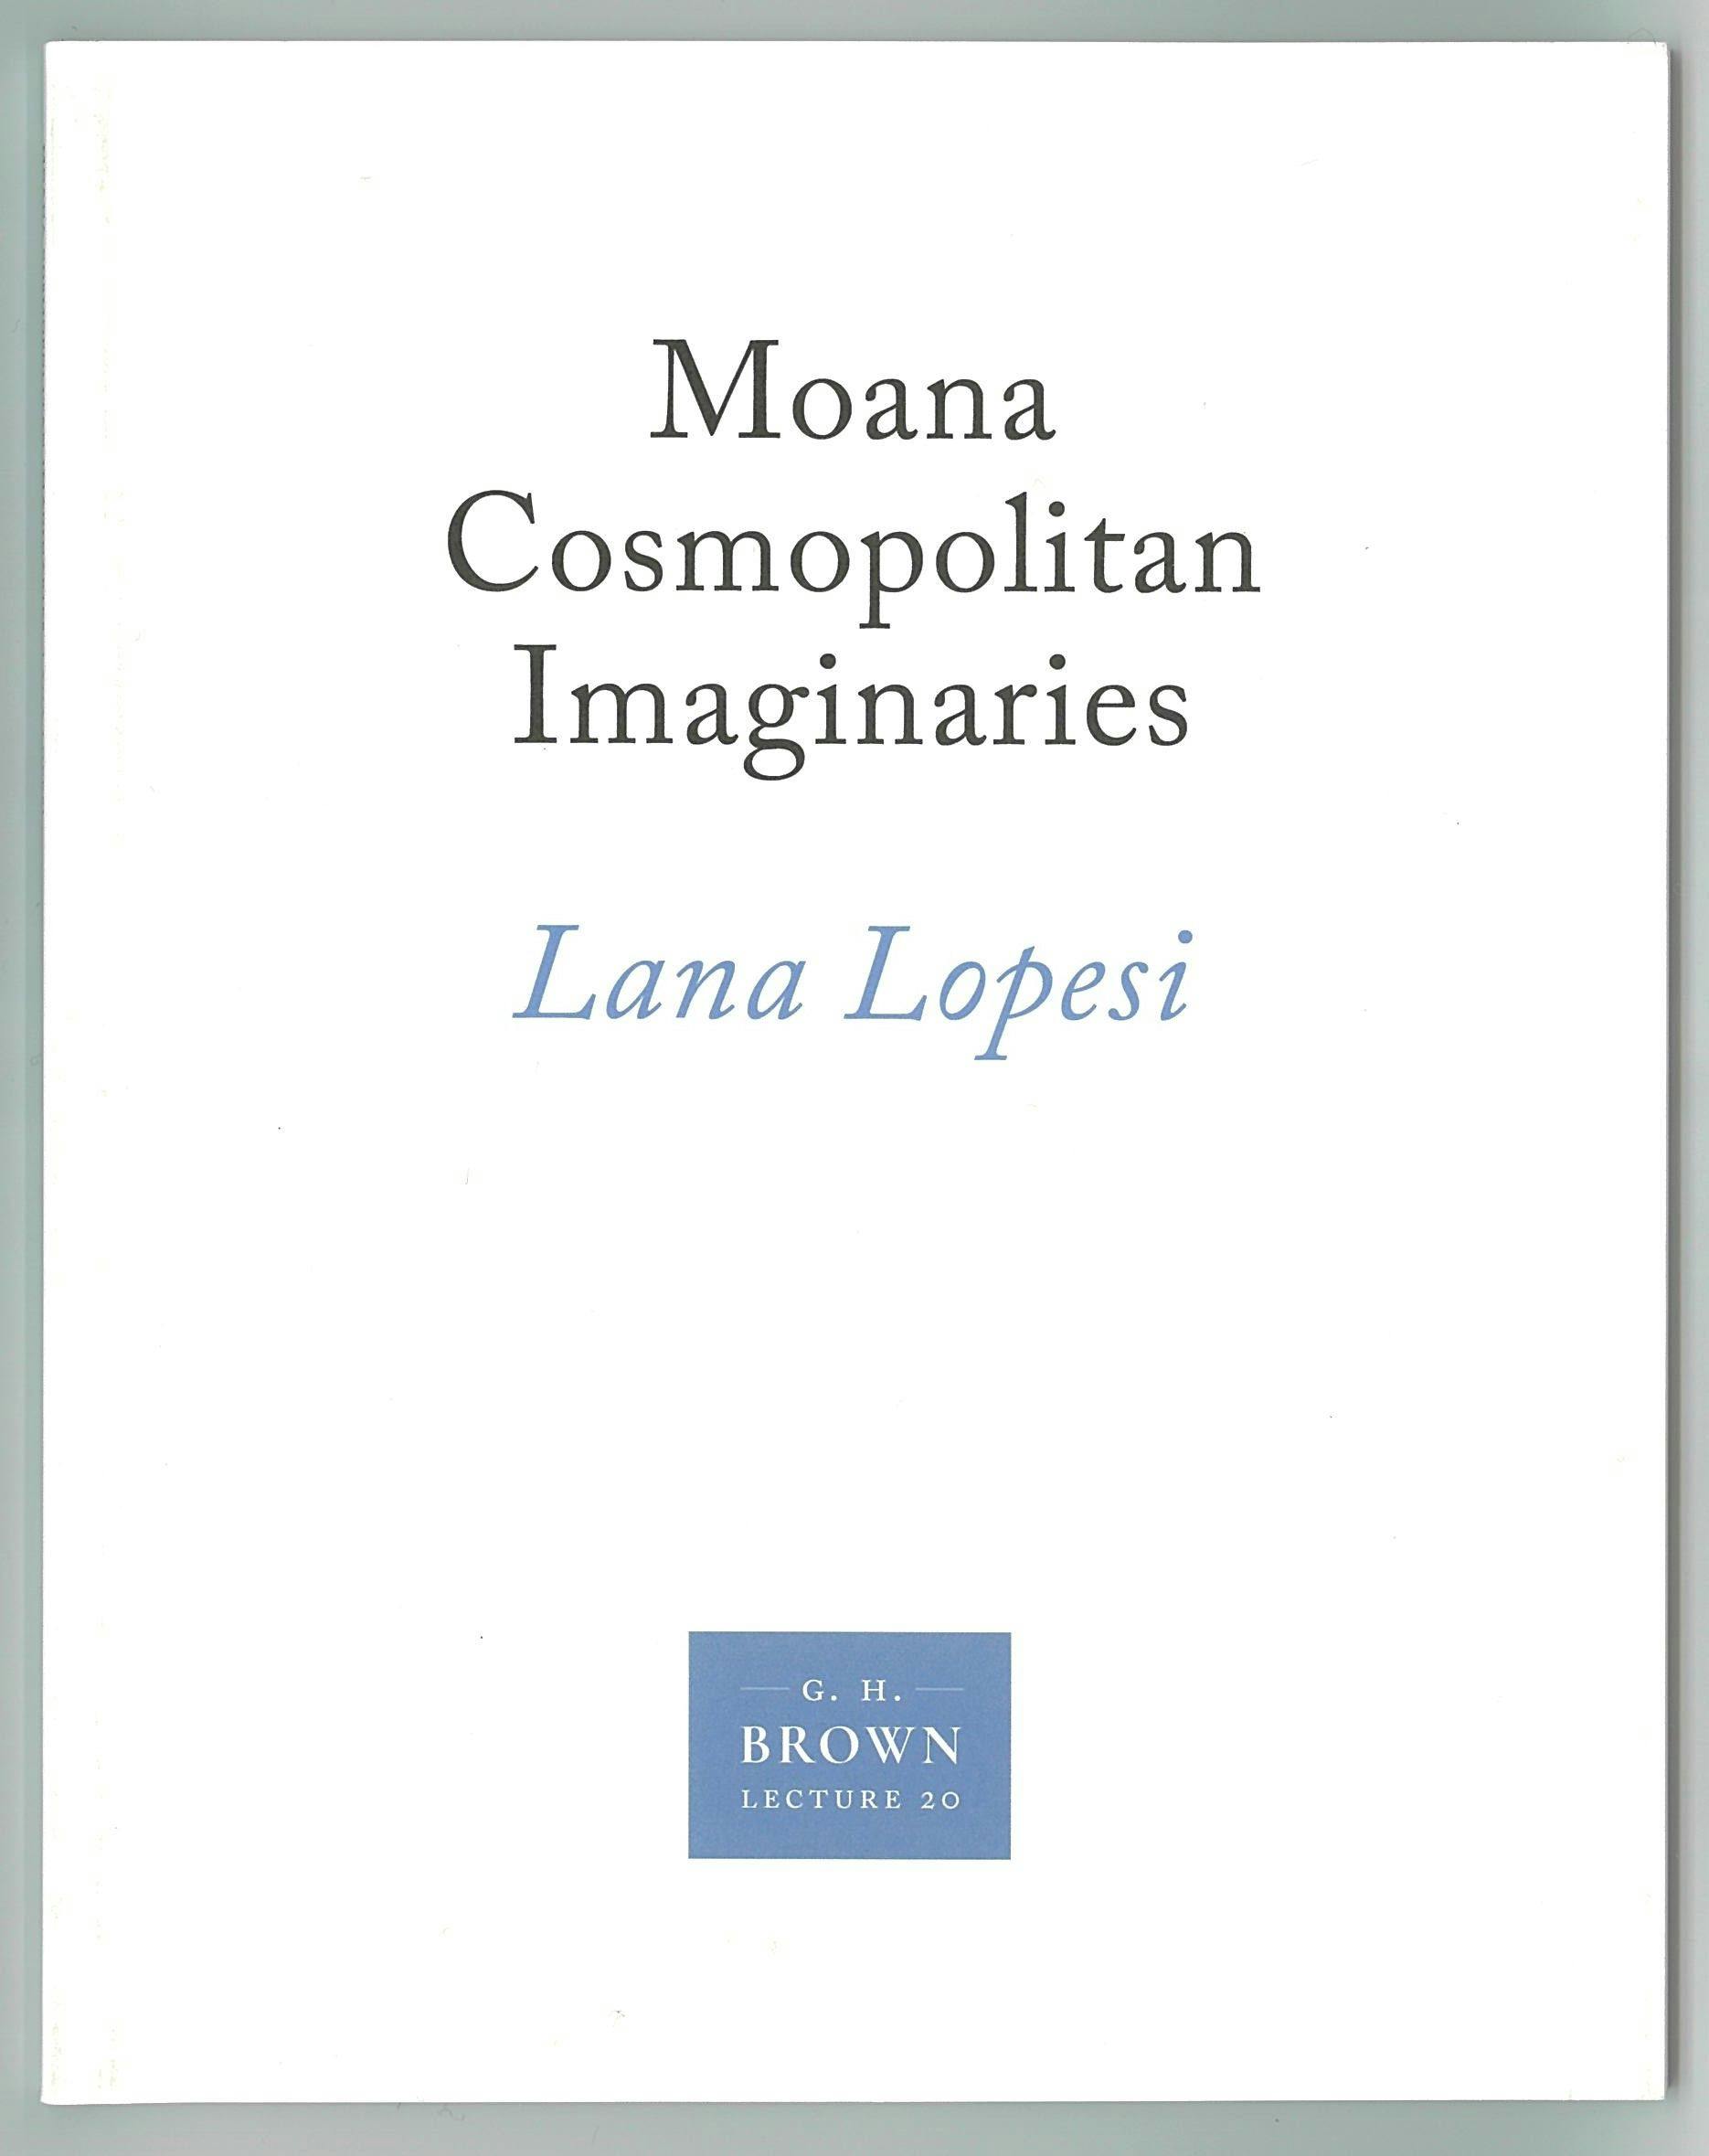 Gordon H. Brown Lecture 20: Lana Lopesi, 'Moana Cosmopolitan Imaginaries'